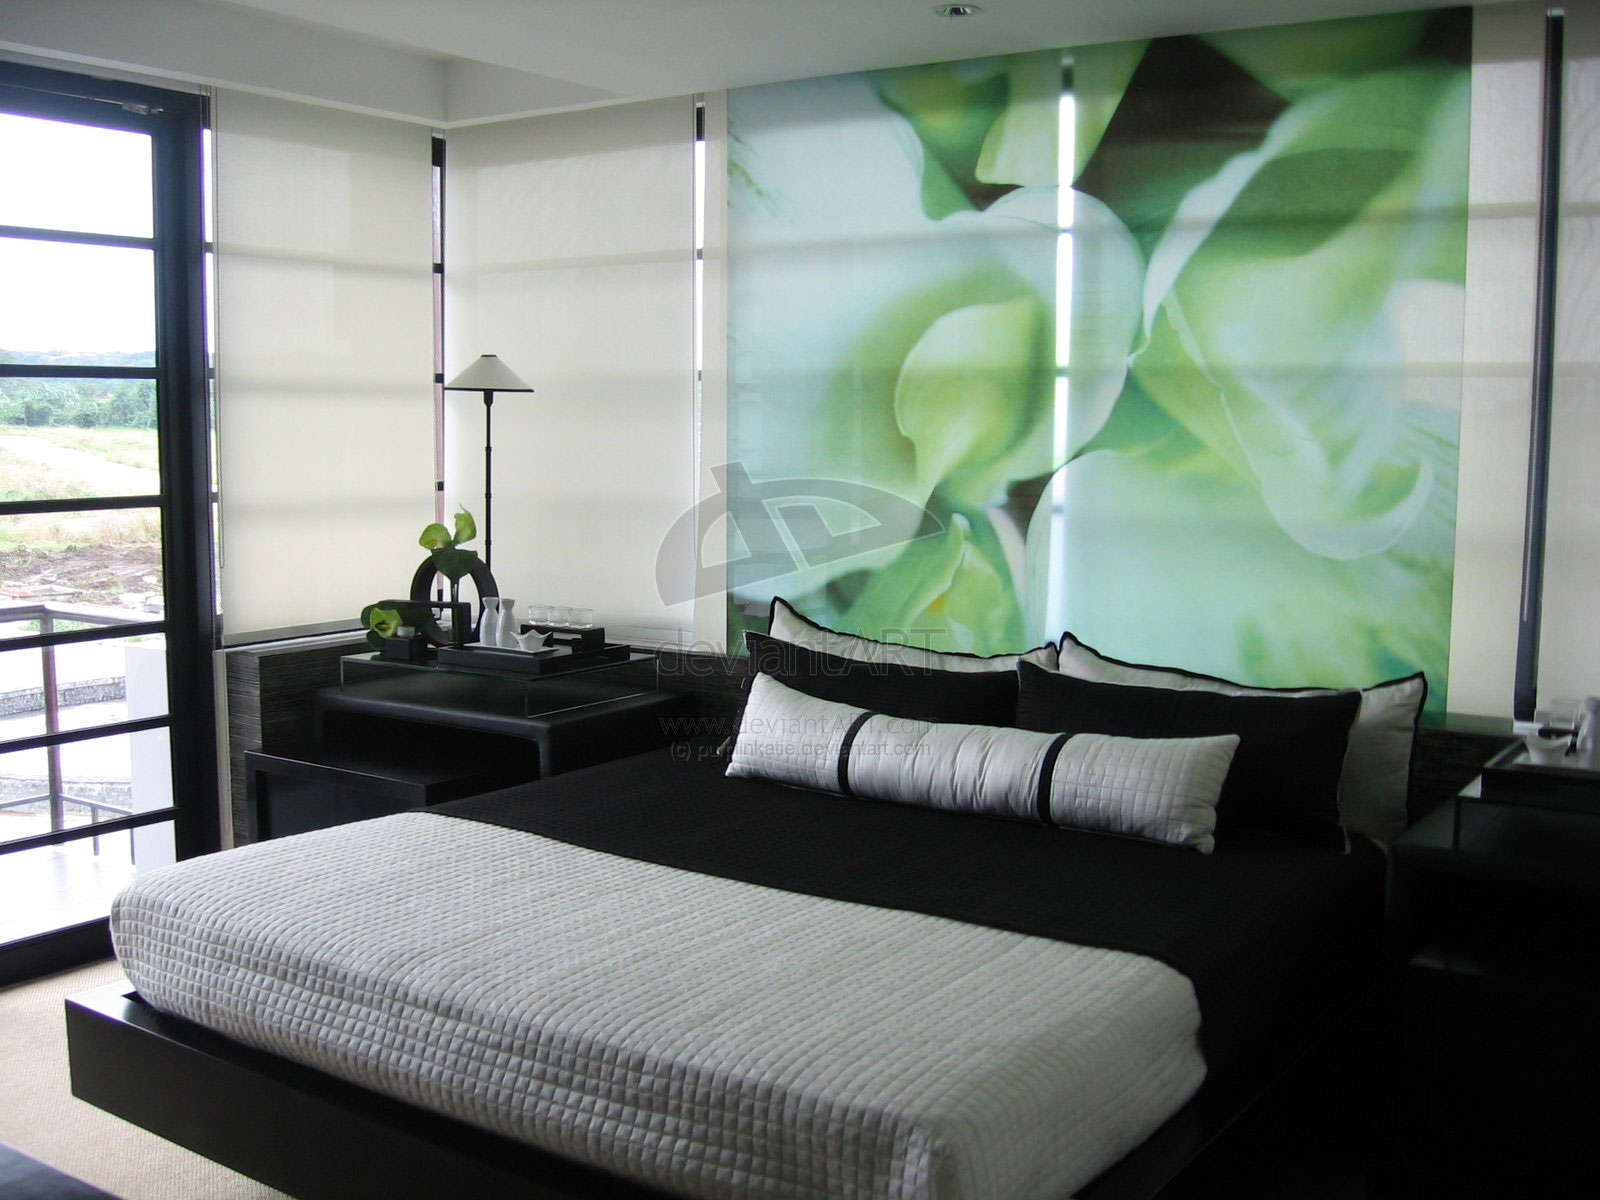 Green And Black Room 2 Widescreen Wallpaper ...
